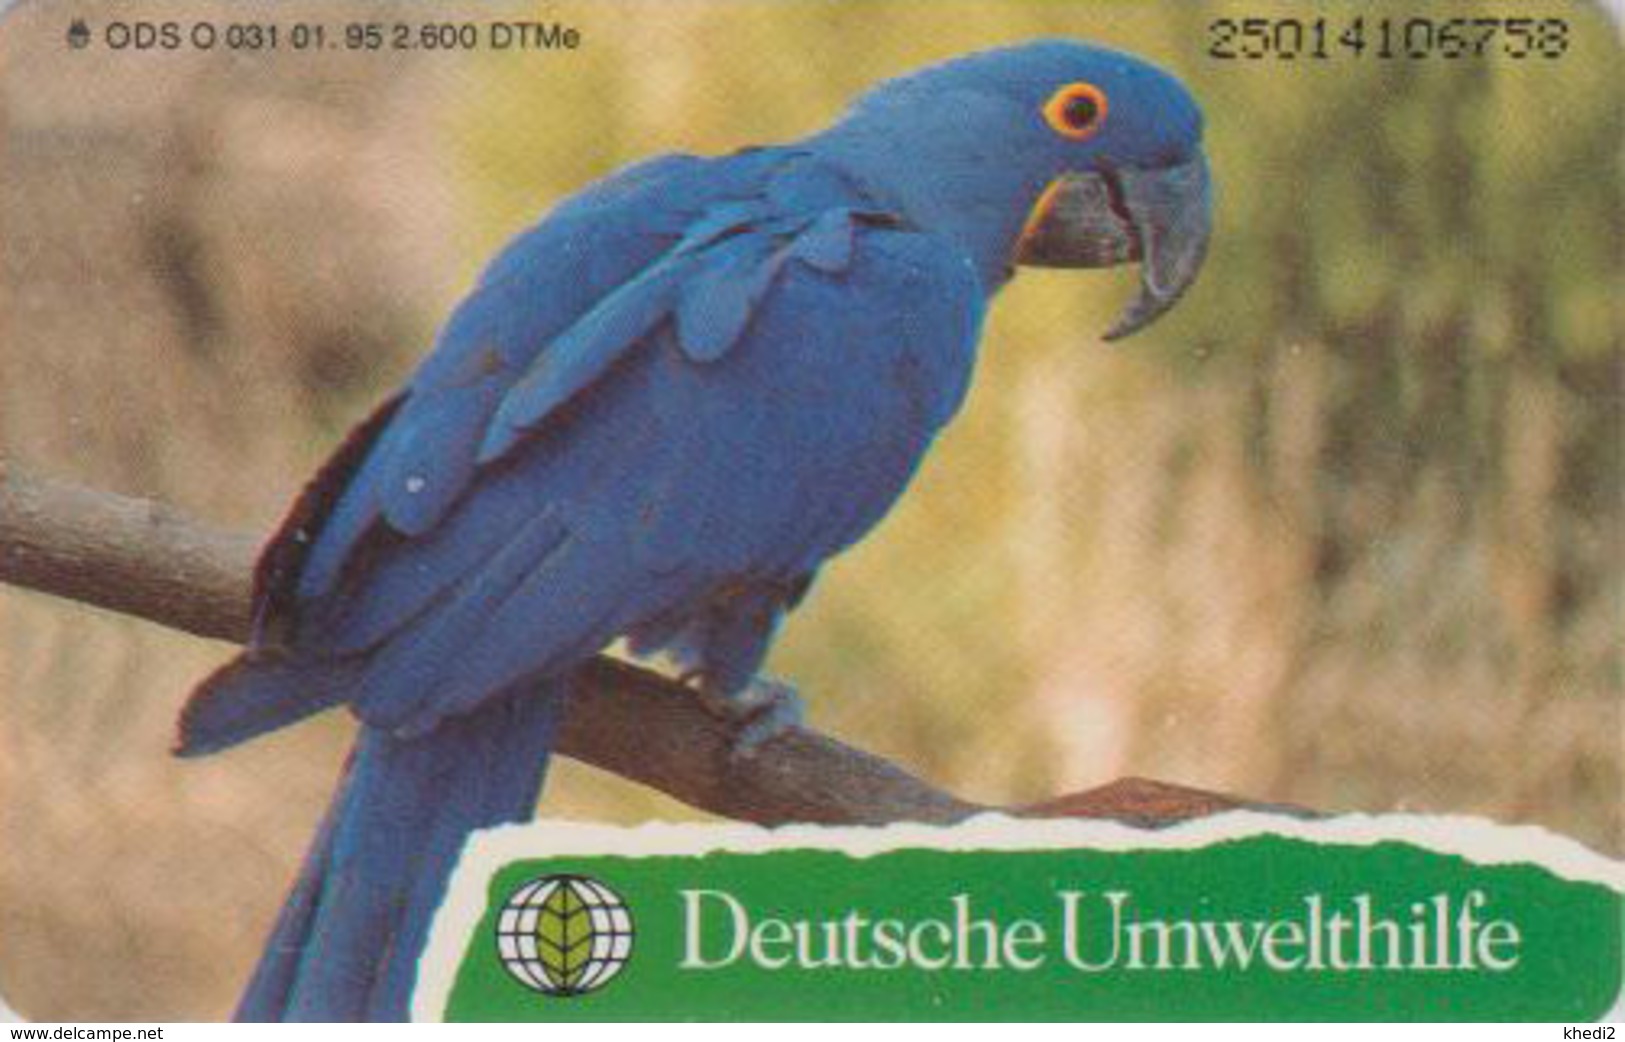 Télécarte à Puce Allemagne - DEUTSCHE UMWELTHILFE - ANIMAL - OISEAU ARA PERROQUET PARROT BIRD - Chip Phonecard - Perroquets